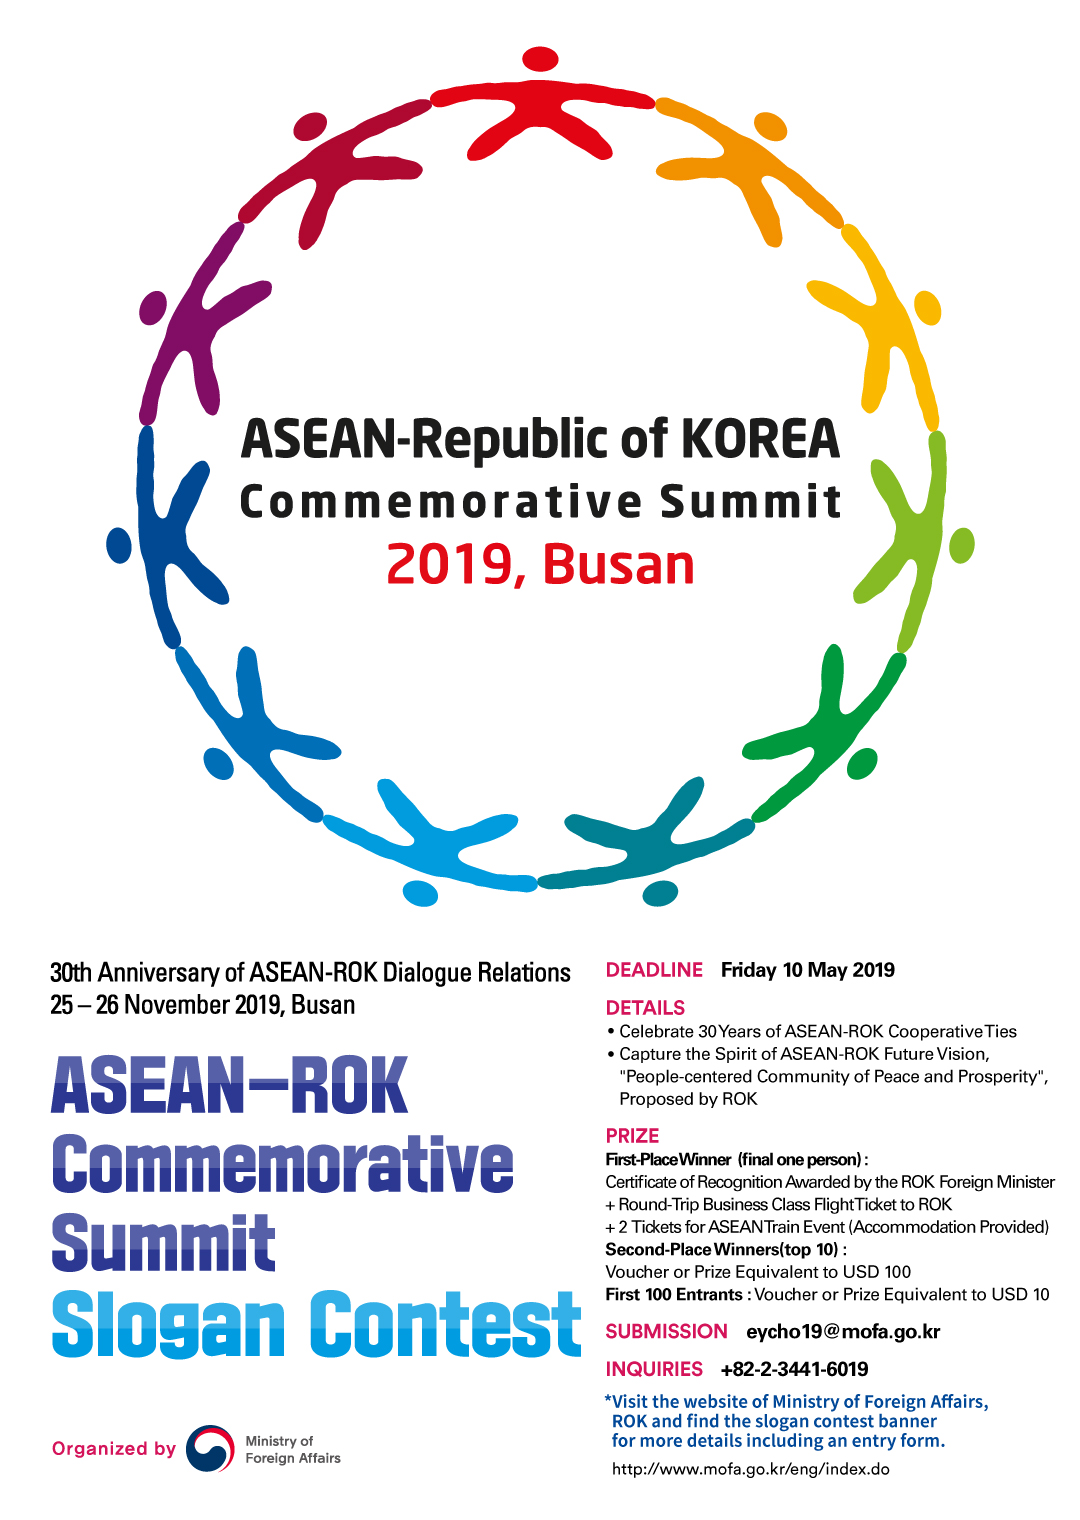 Slogan Contest for 2019 ASEAN-ROK Commemorative Summit